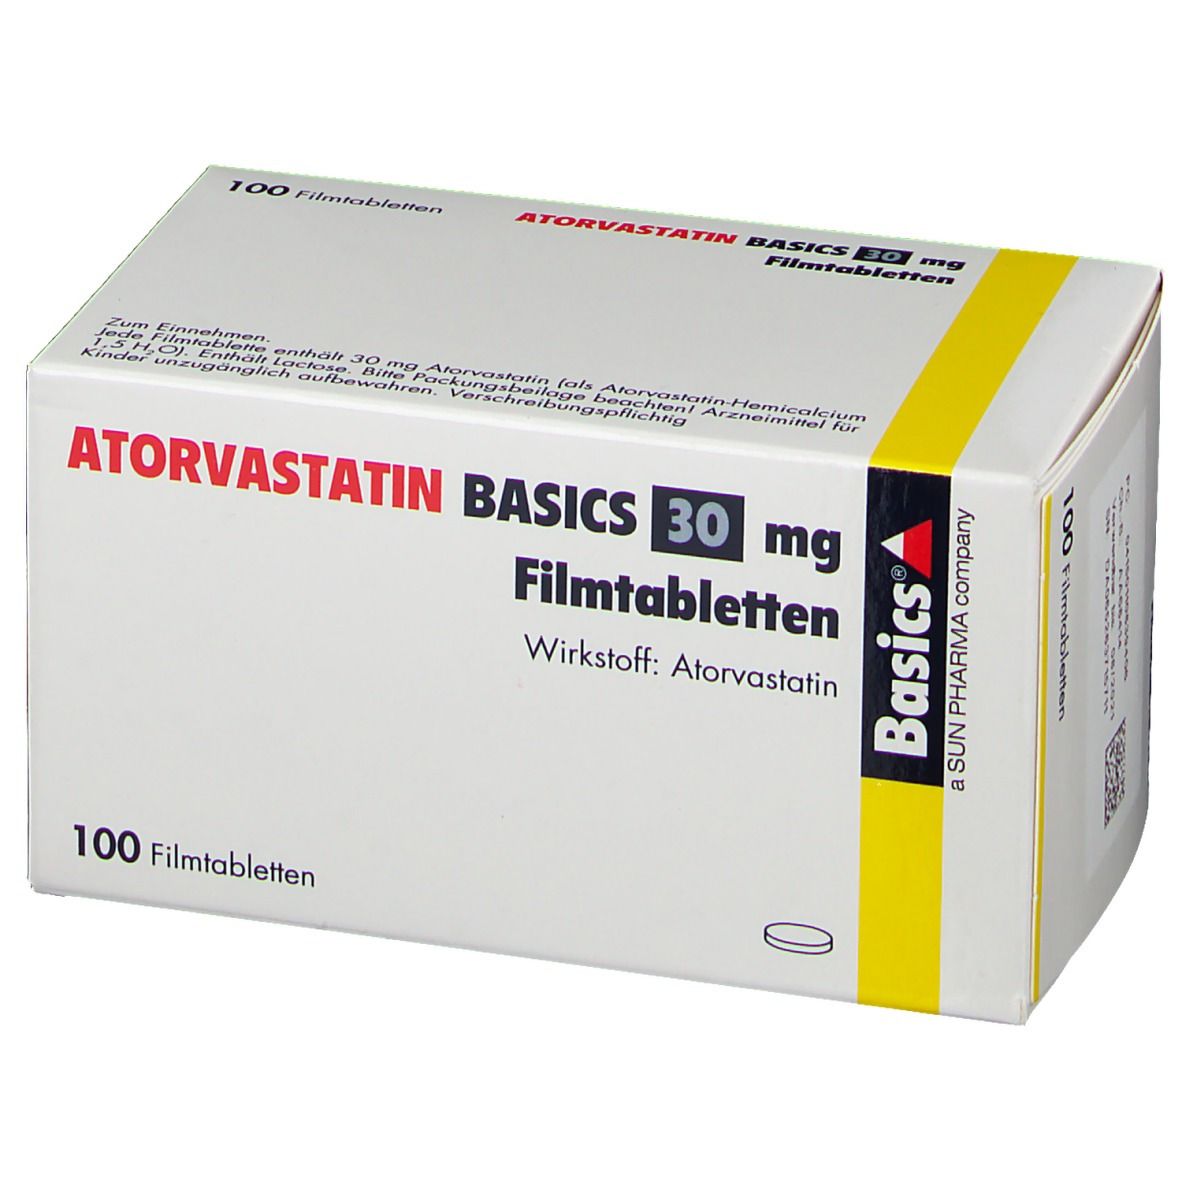 ATORVASTATIN BASICS 30 mg